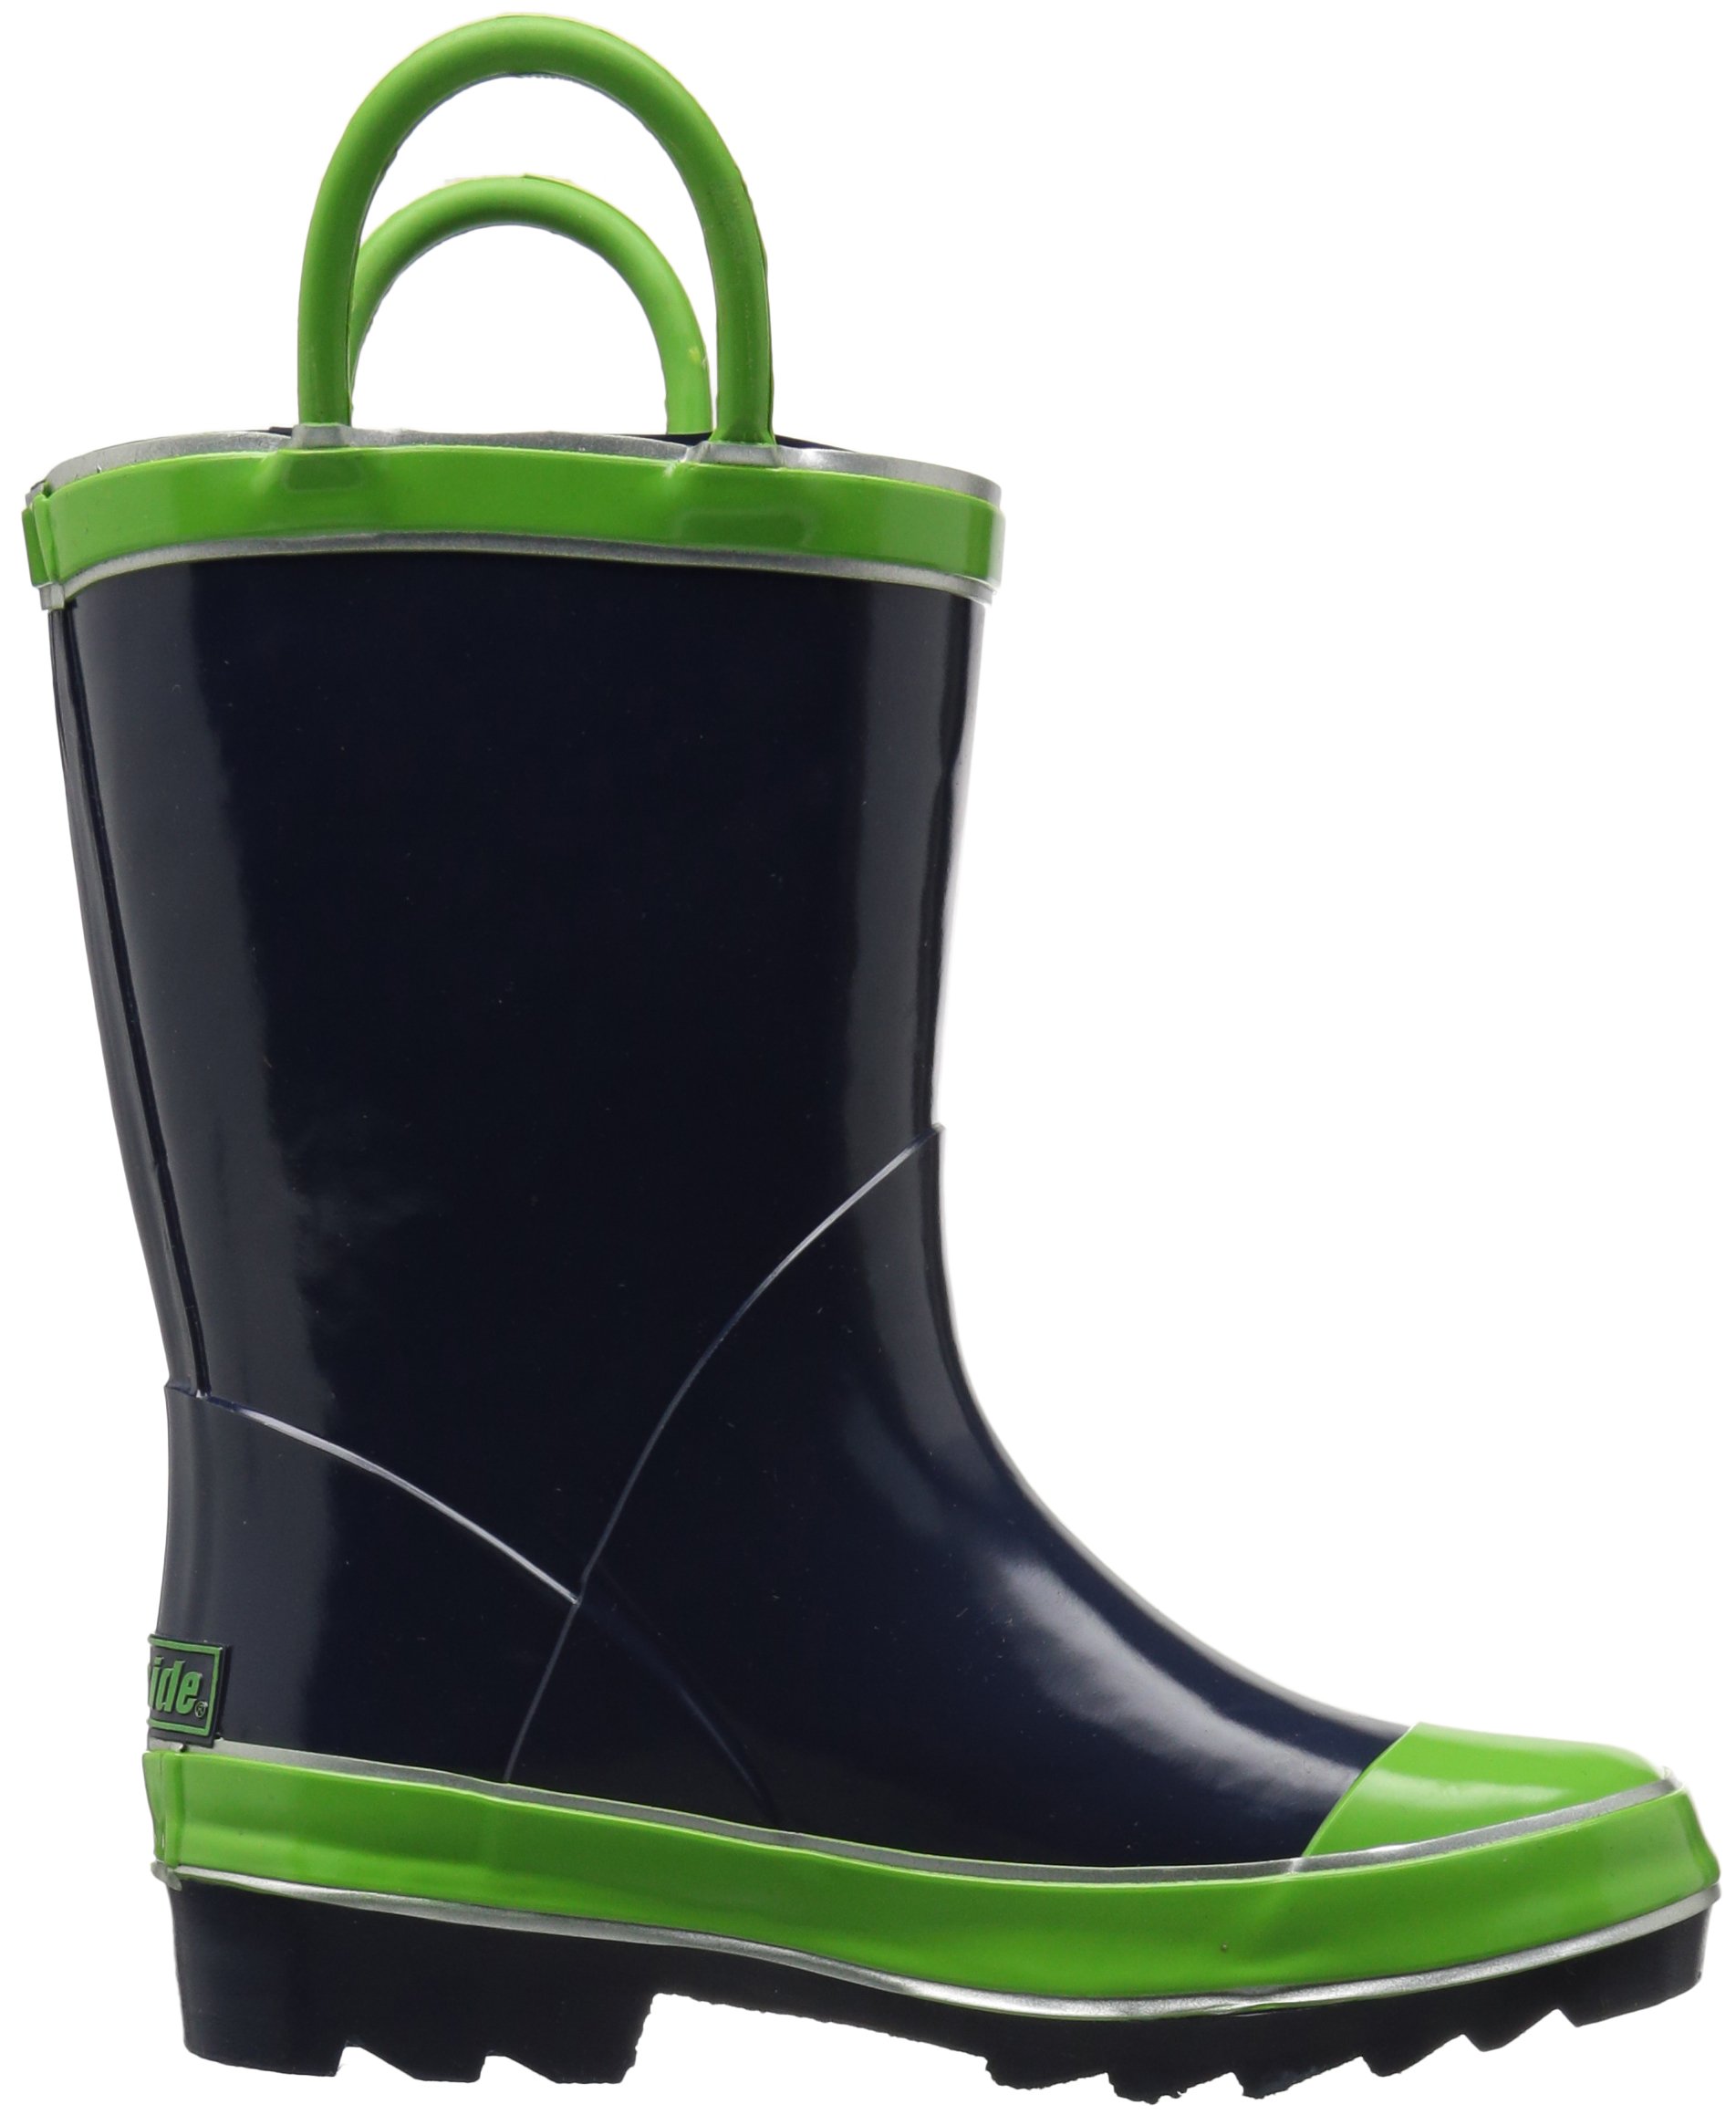 Northside baby girls Classic Rain Boot, Navy/Green, 8 Toddler US